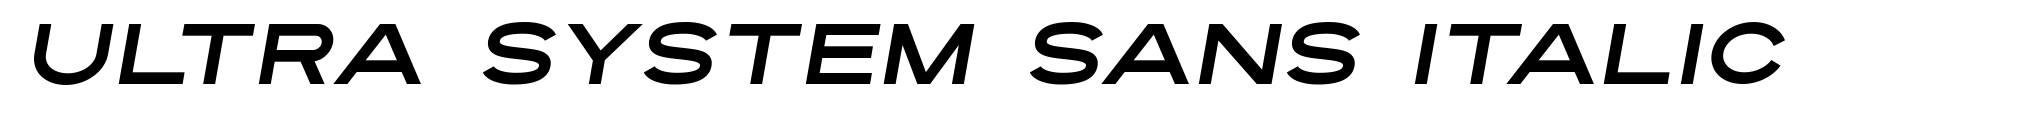 Ultra System Sans Italic image